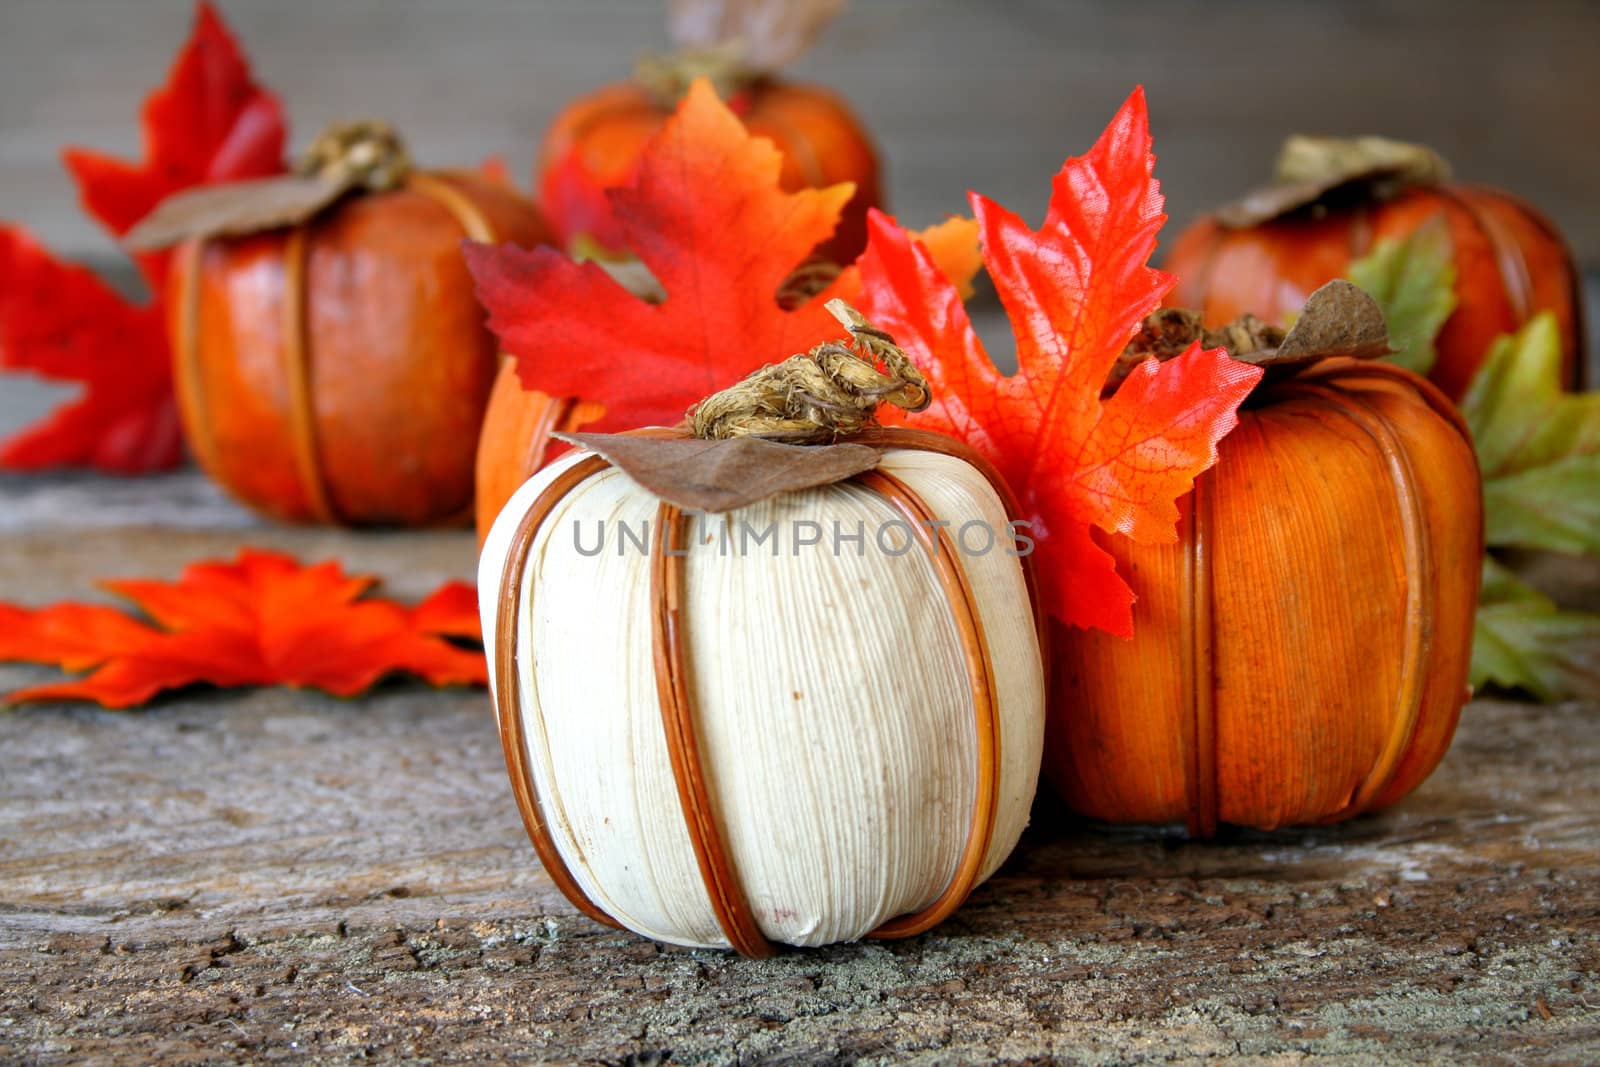 Pumpkins by thephotoguy